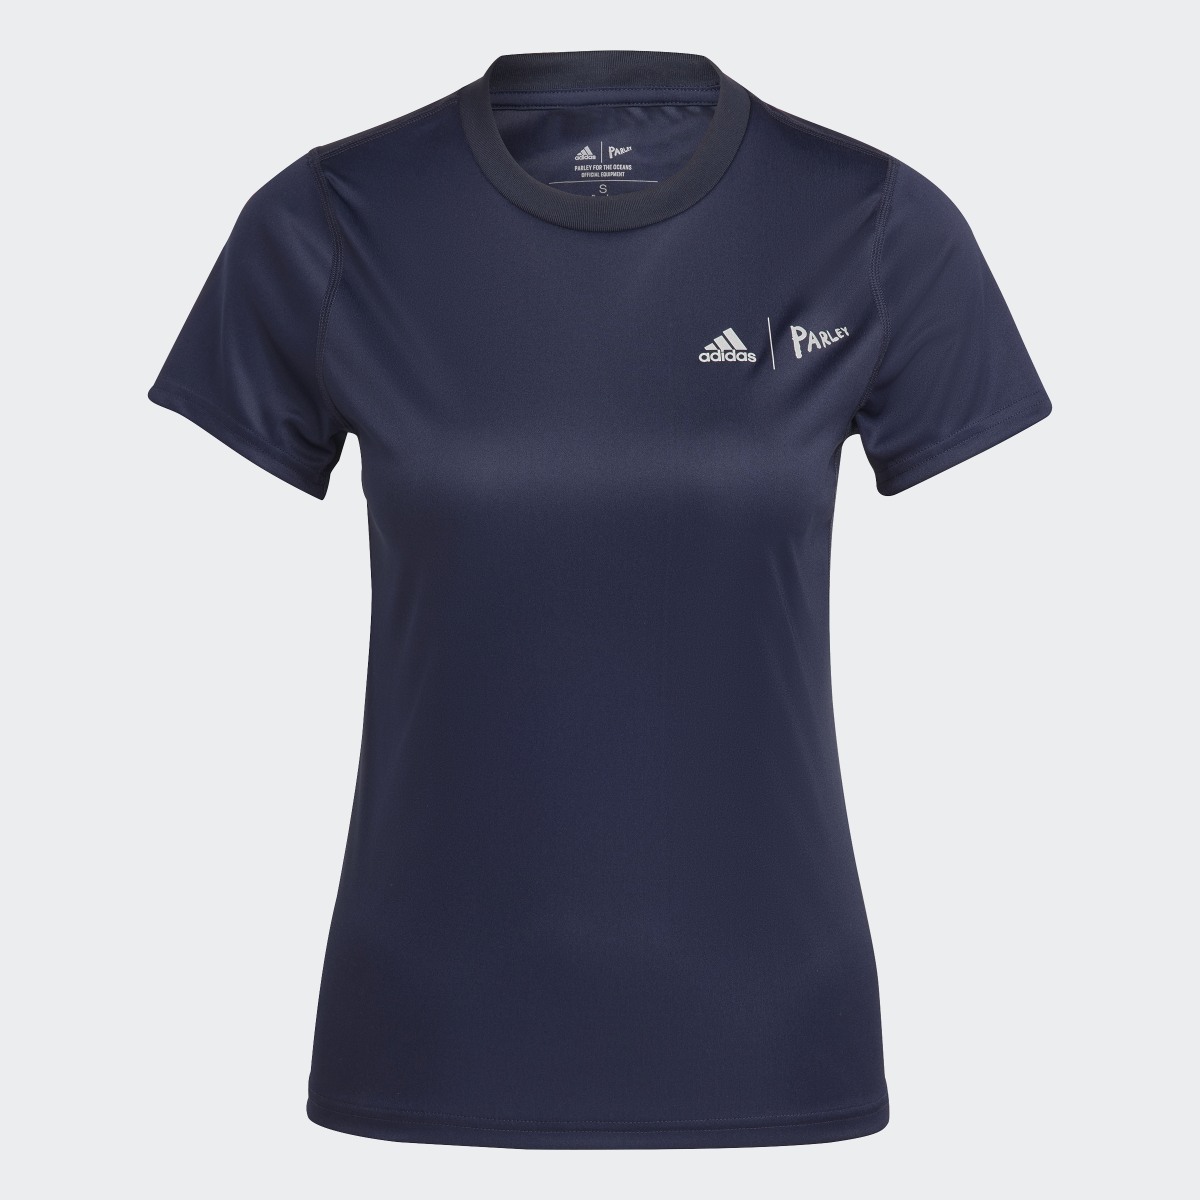 Adidas x Parley Running T-Shirt. 5